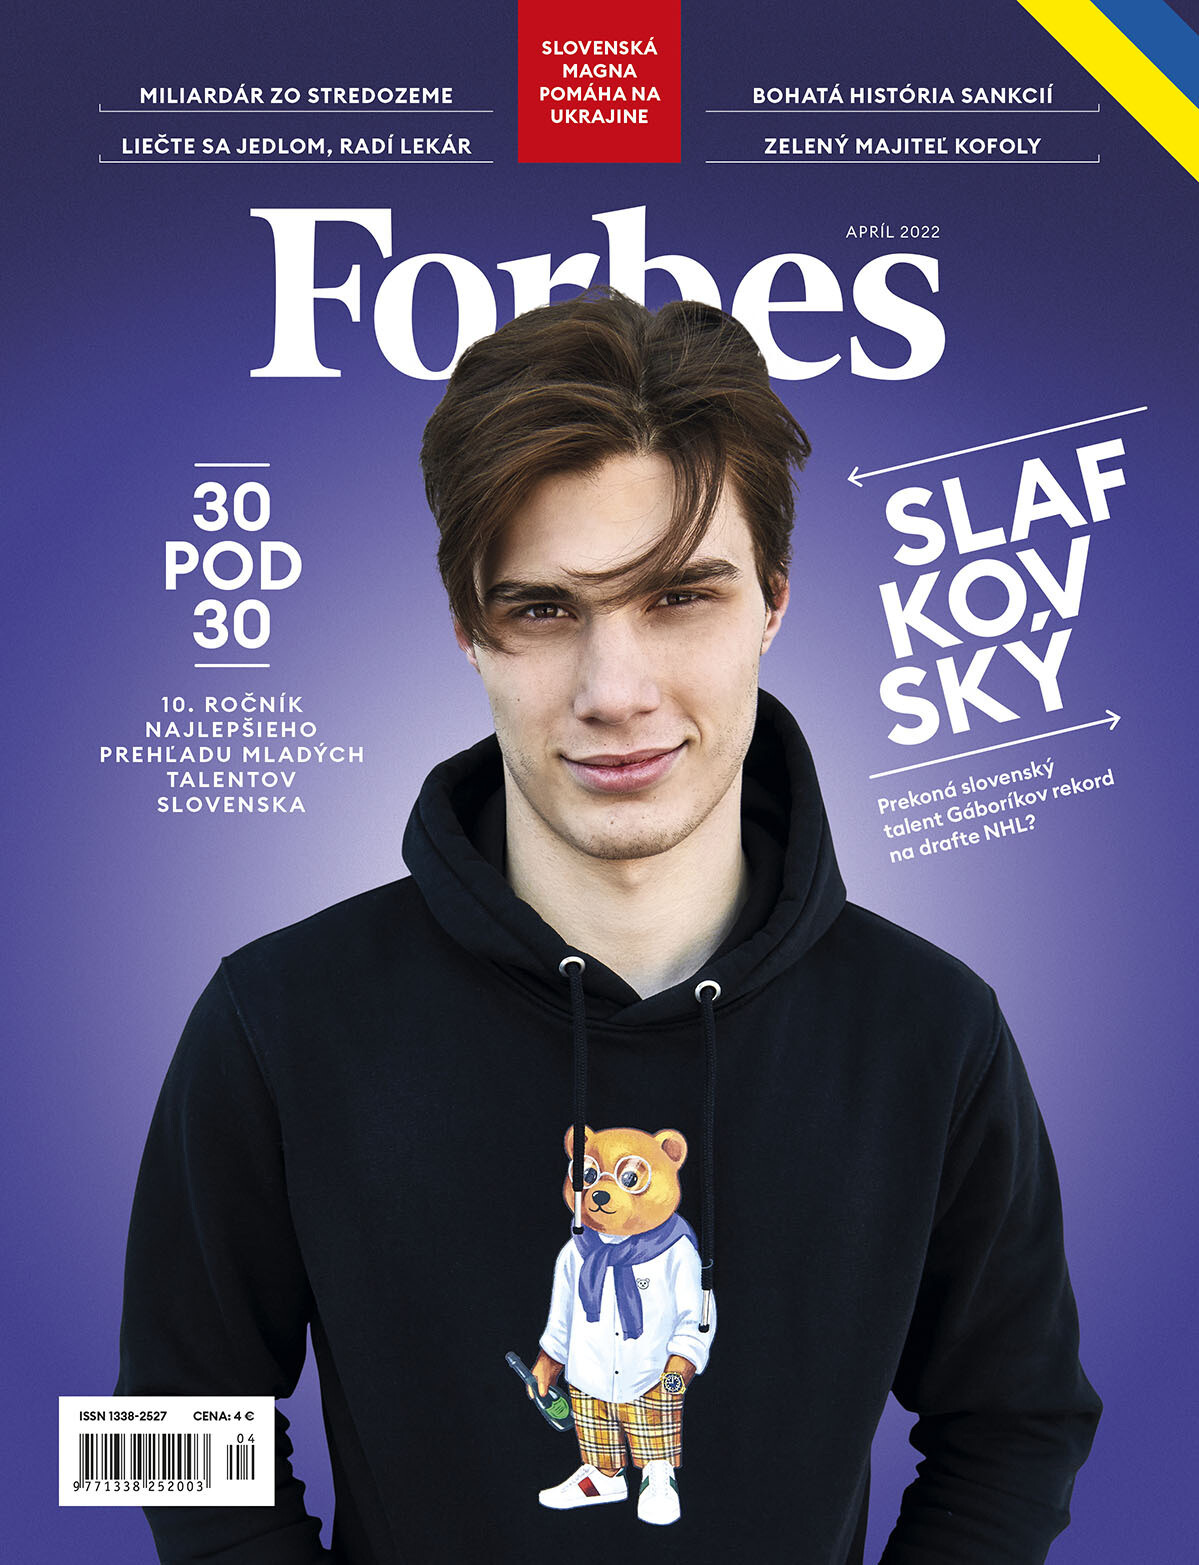 Titulka Forbes Magazín Juraj Slafkovský 30 pod 30